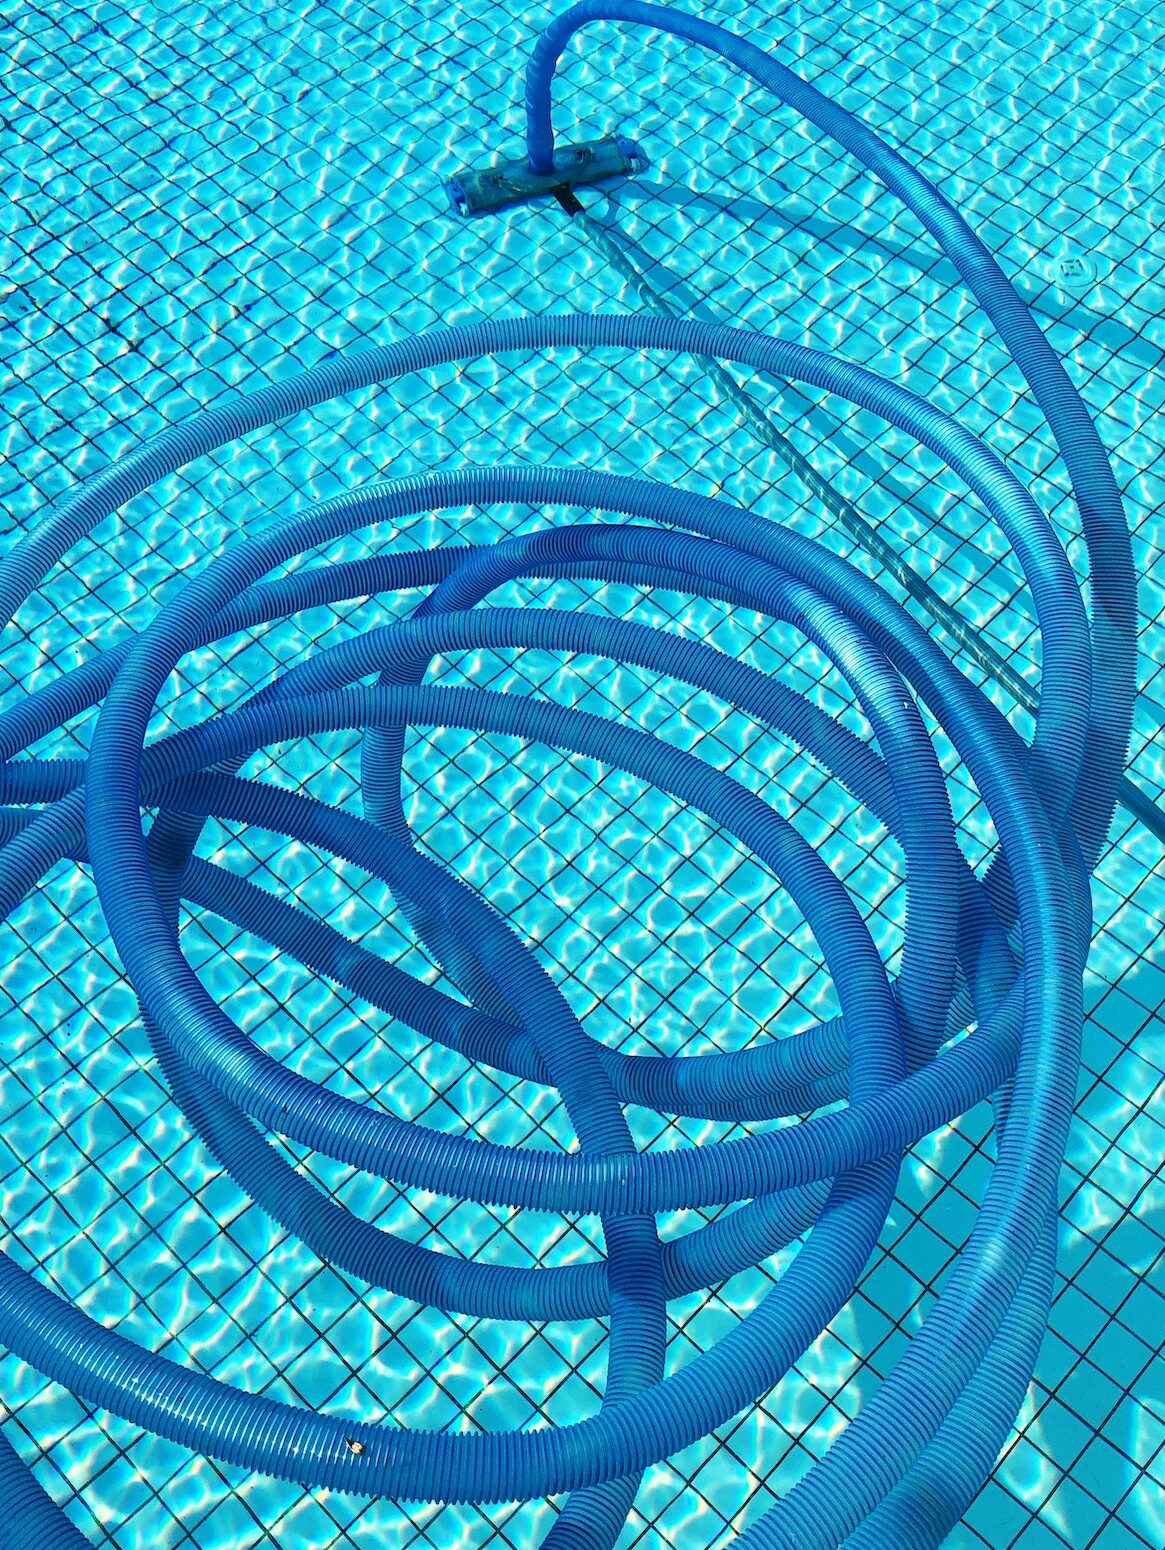 Pool vacuum cleaner in a swimming pool